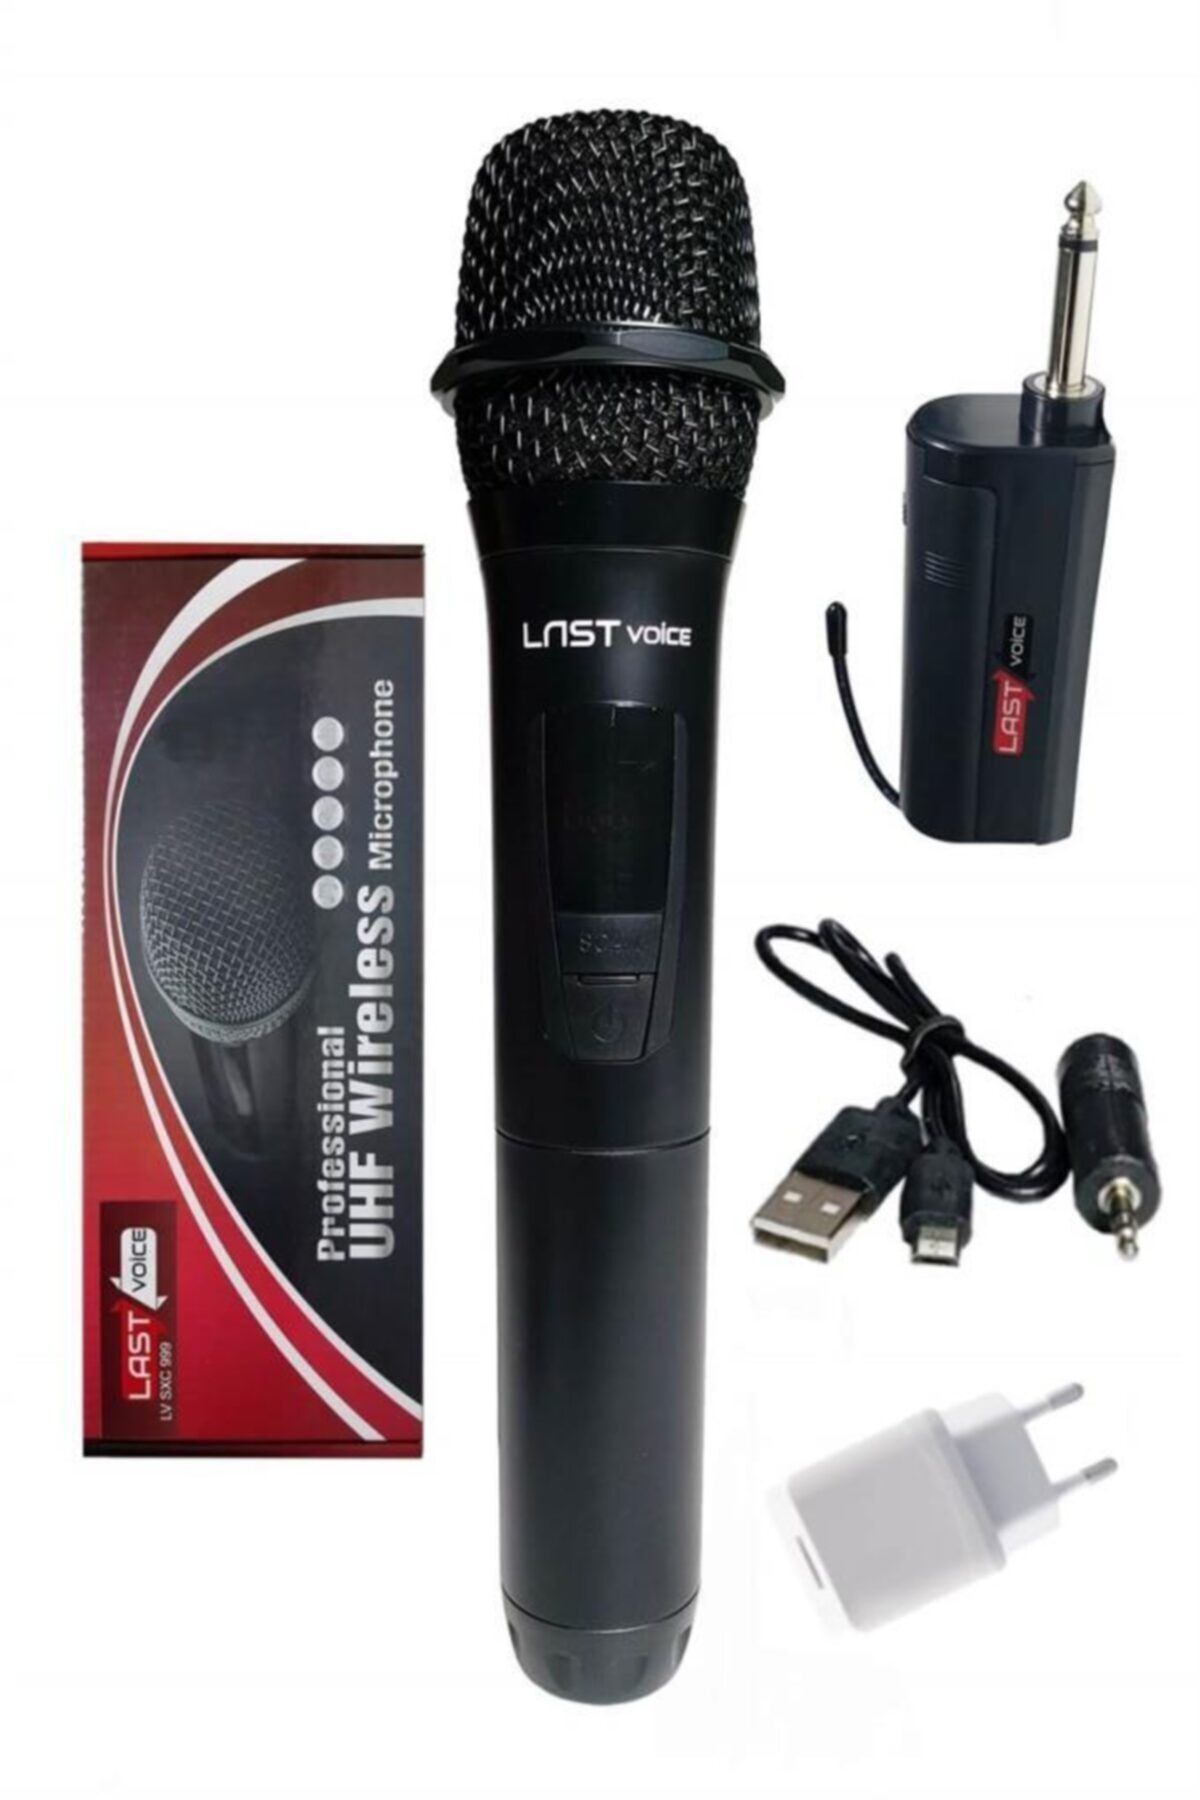 Lastvoice Sxc-999e Şarjlı Telsiz Kablosuz El Mikrofonu